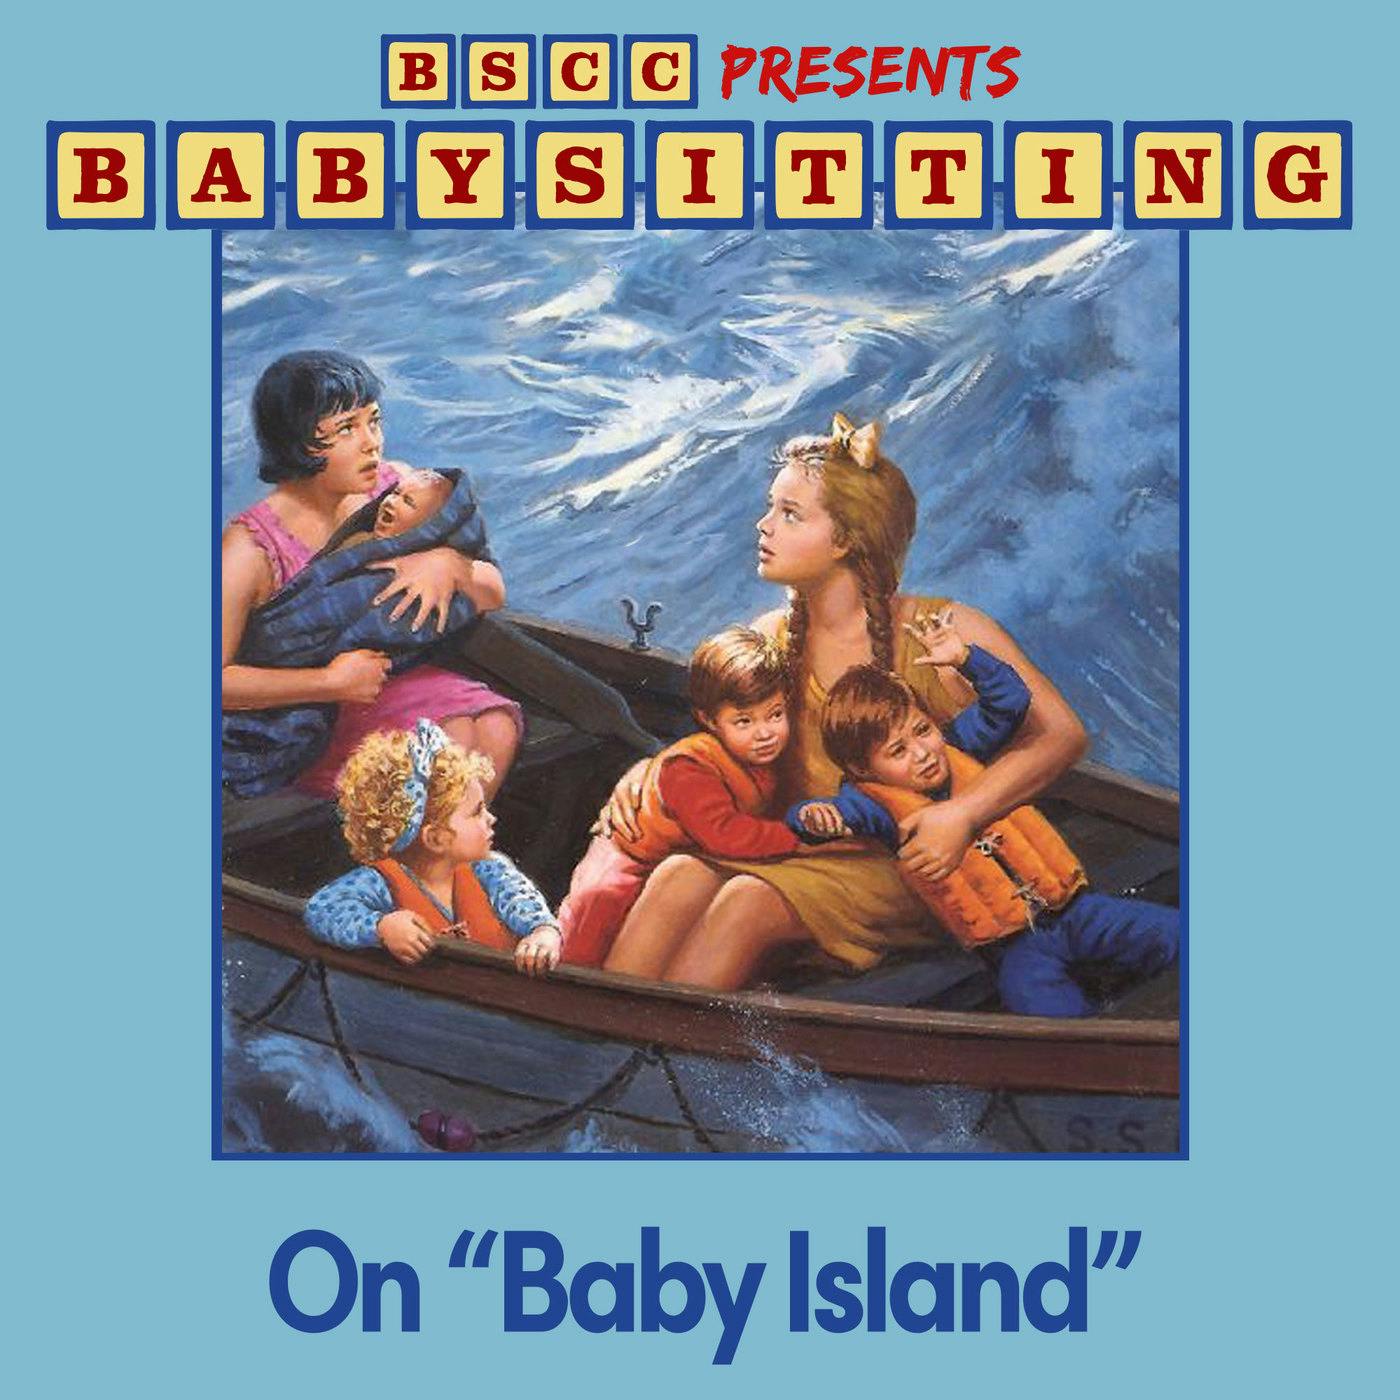 BSCC Presents: Babysitting on ”Baby Island”